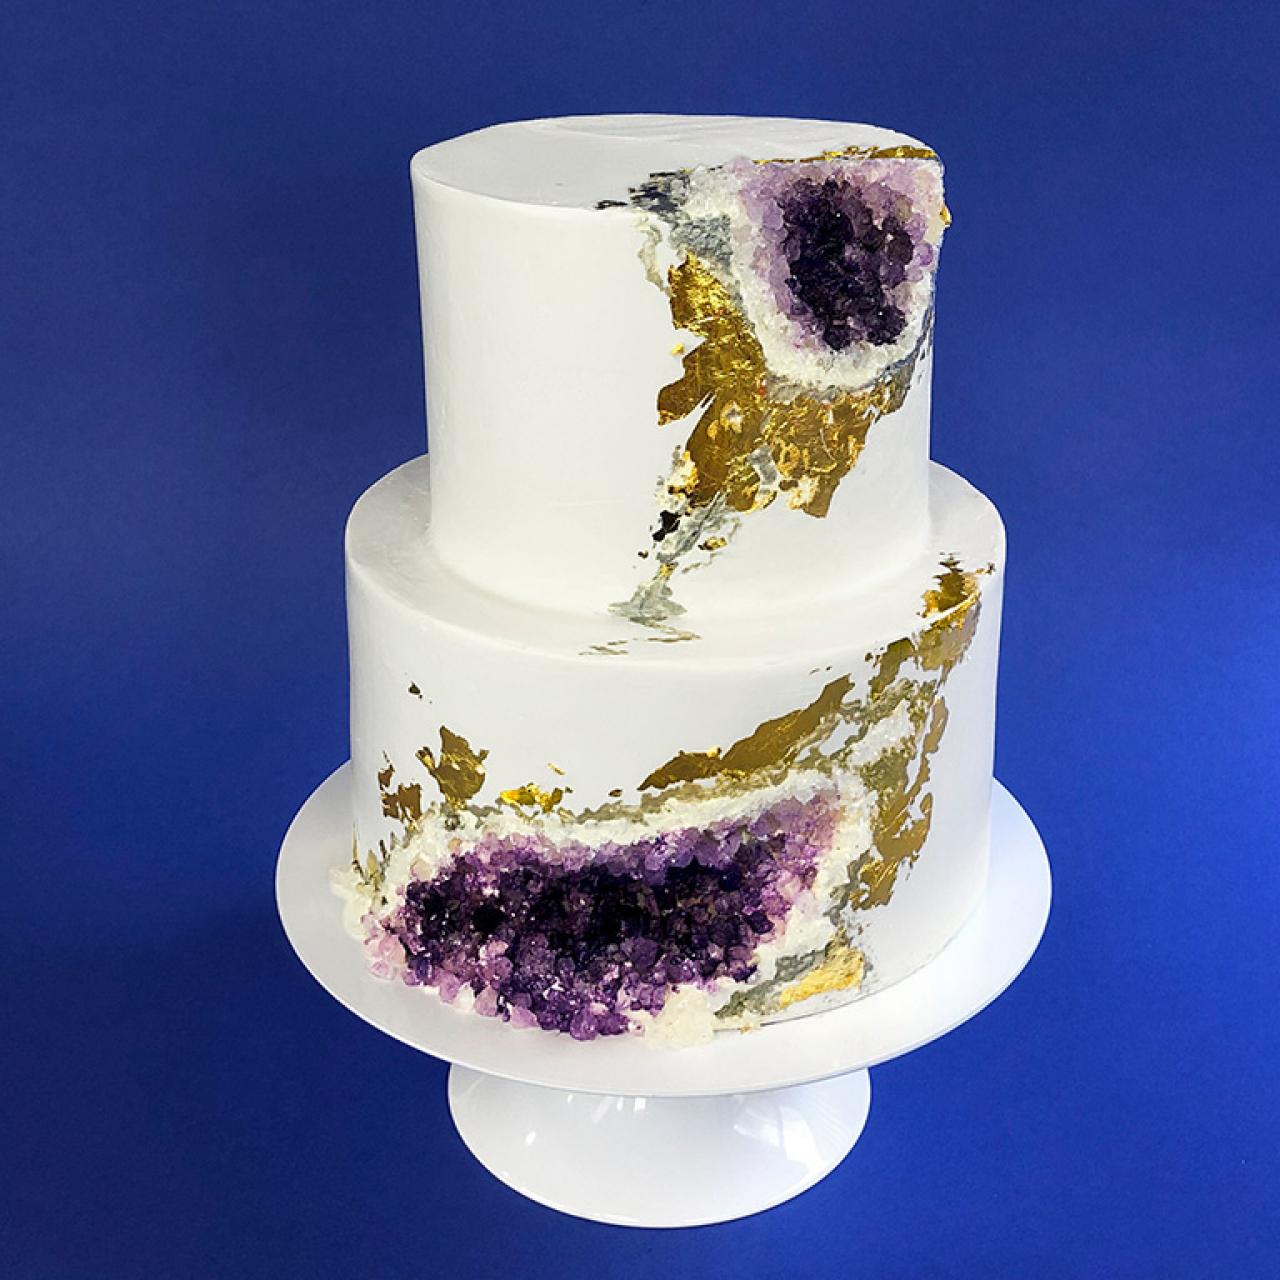 Cake Platter & Agate Knives Wedding Gift Hamper – The Decor Circle